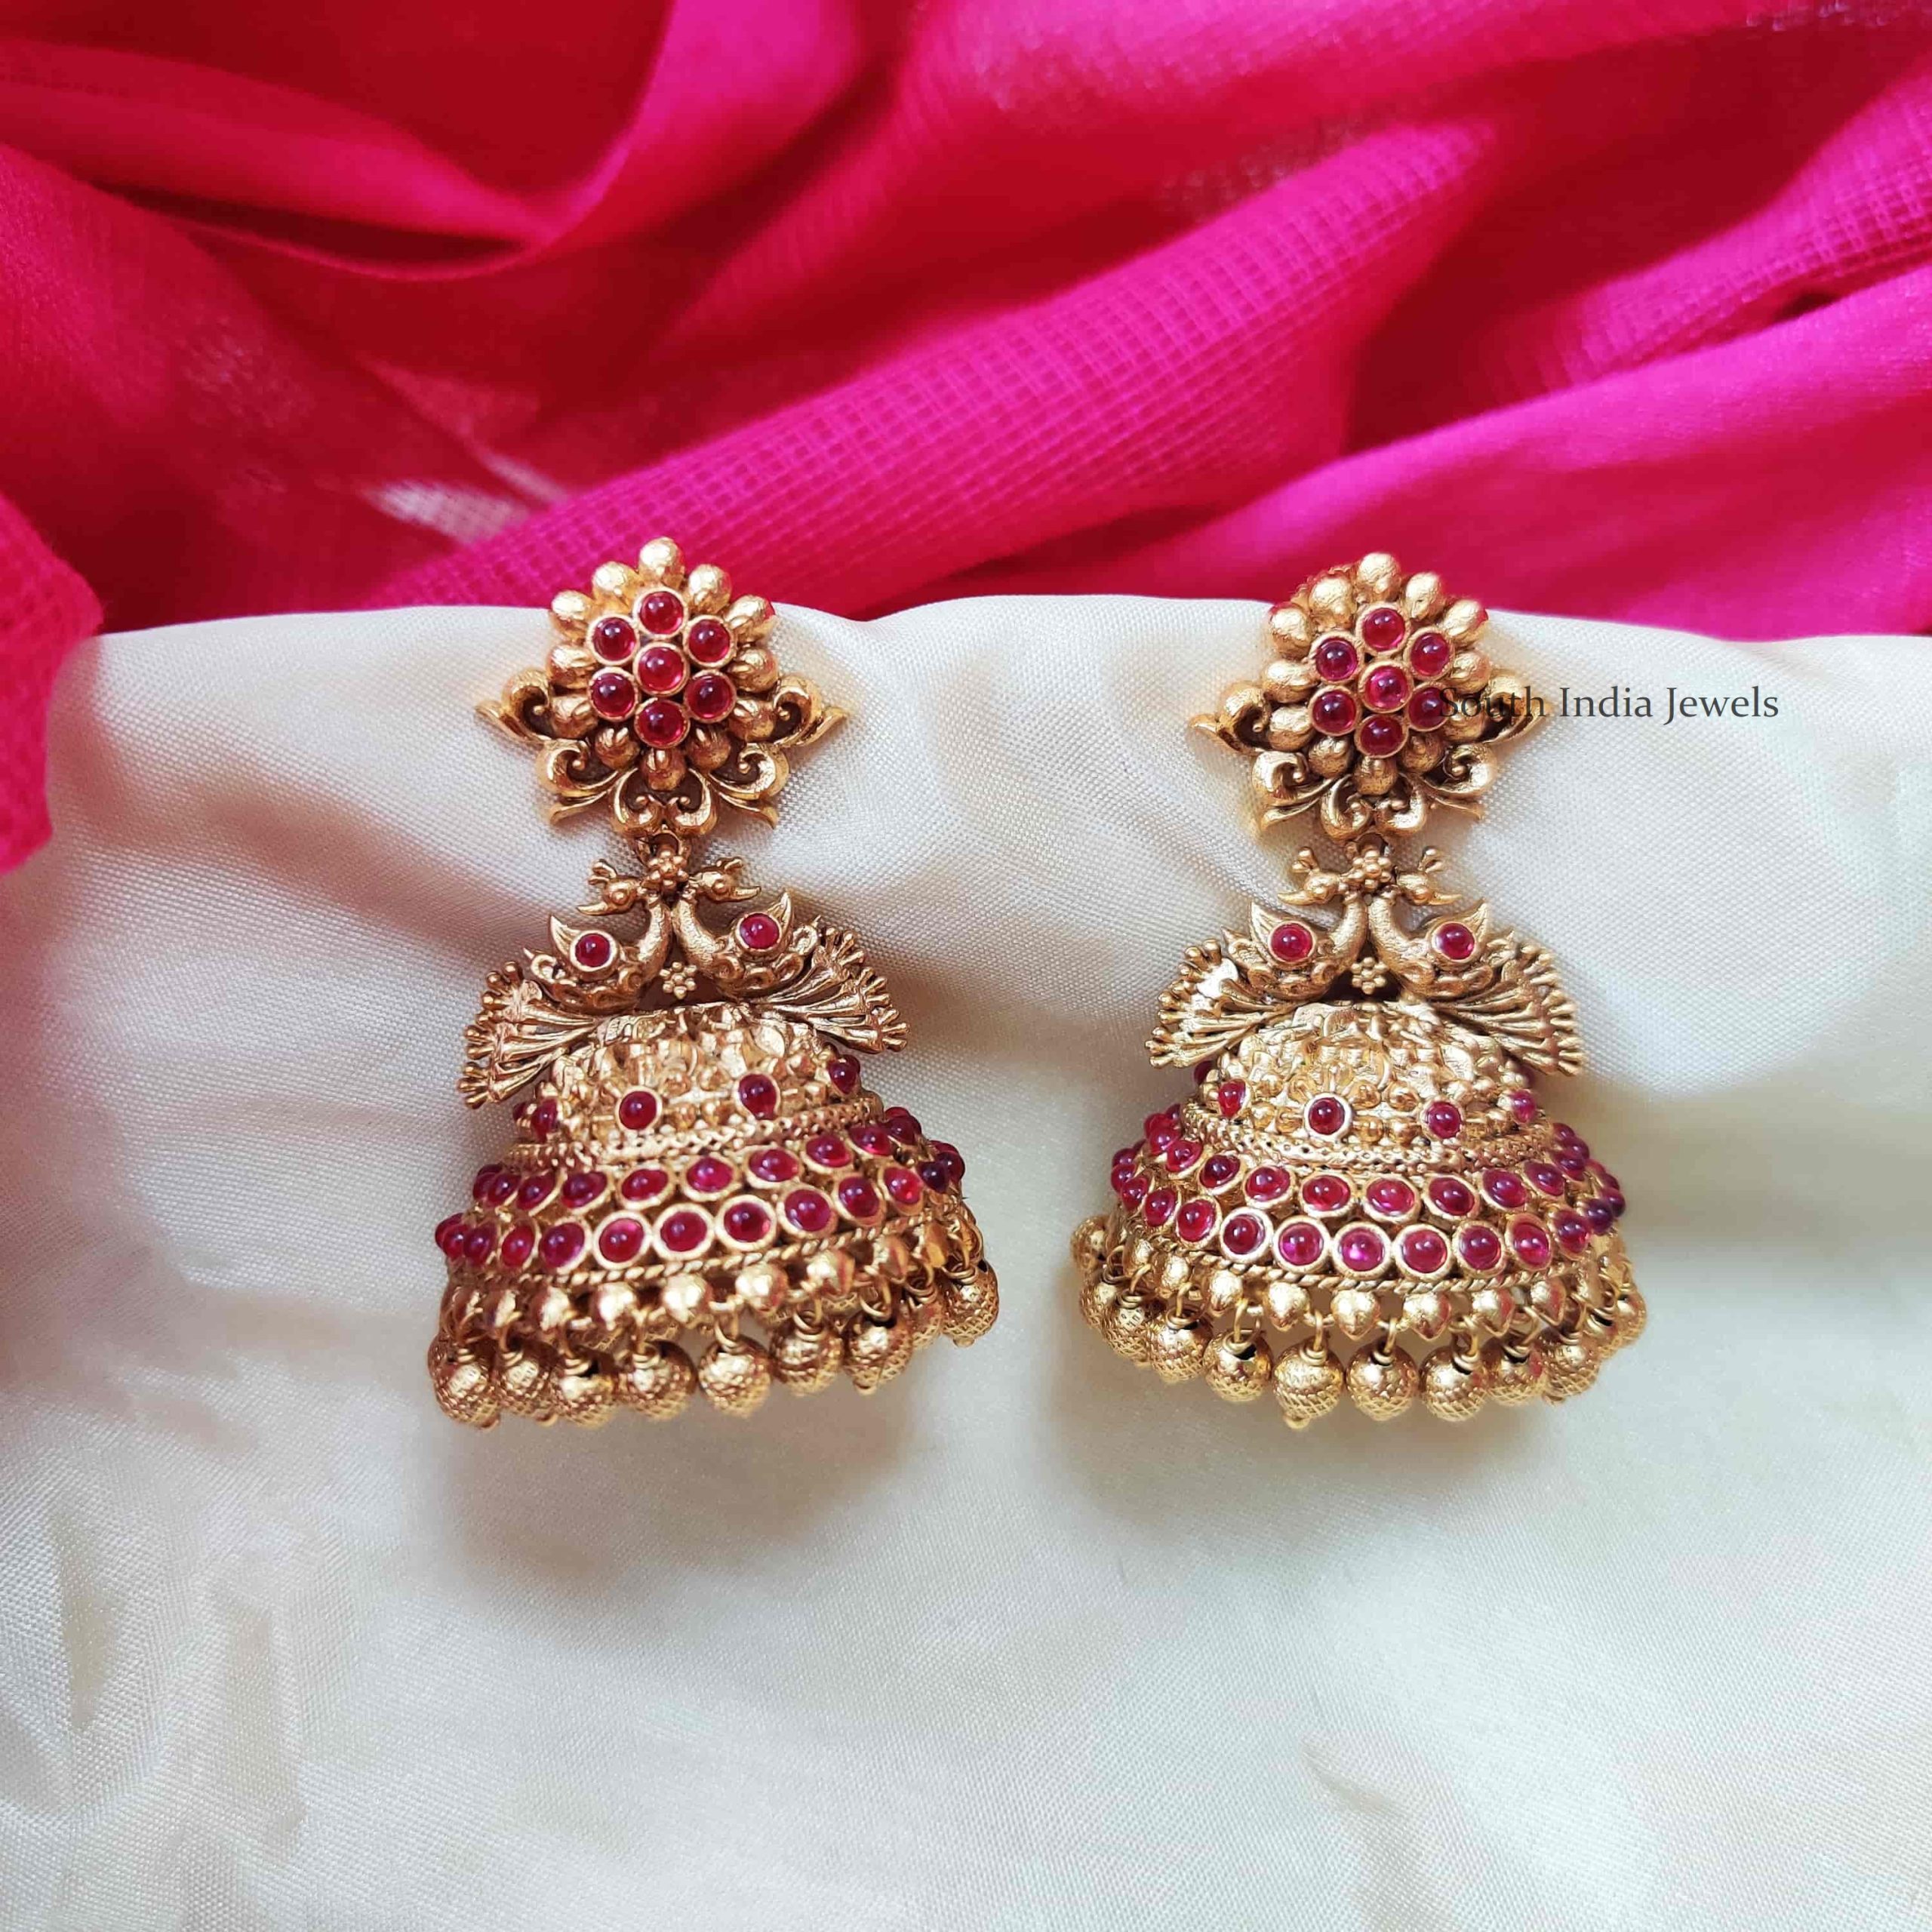 Dual Peacock Kemp Jhumkas - South India Jewels